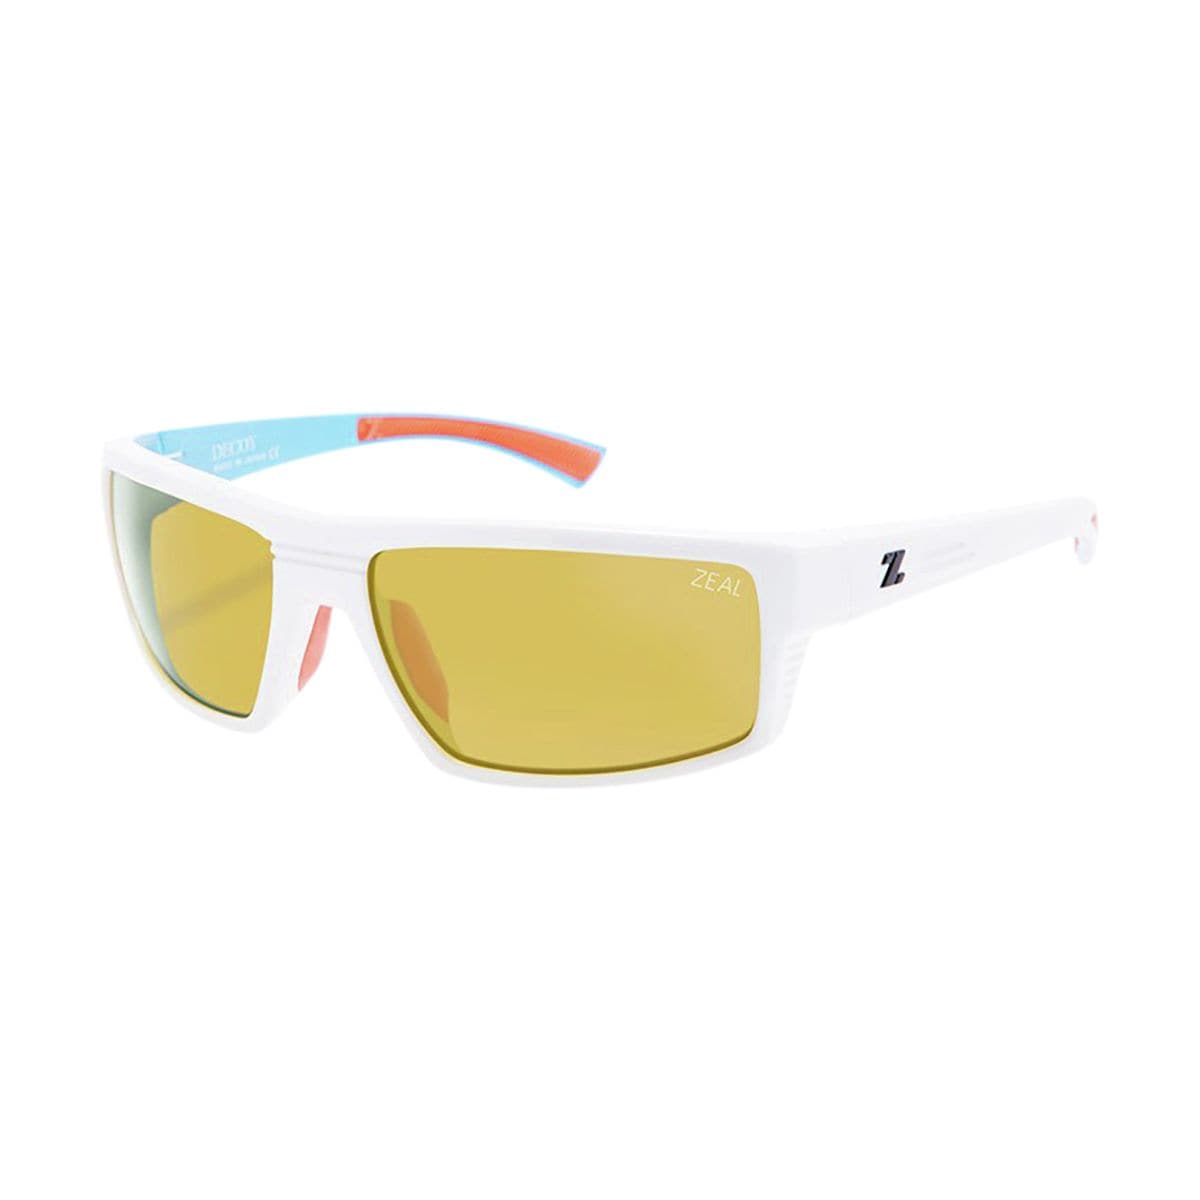 Zeal Decoy Polarized Photochromic Sunglasses - Men's